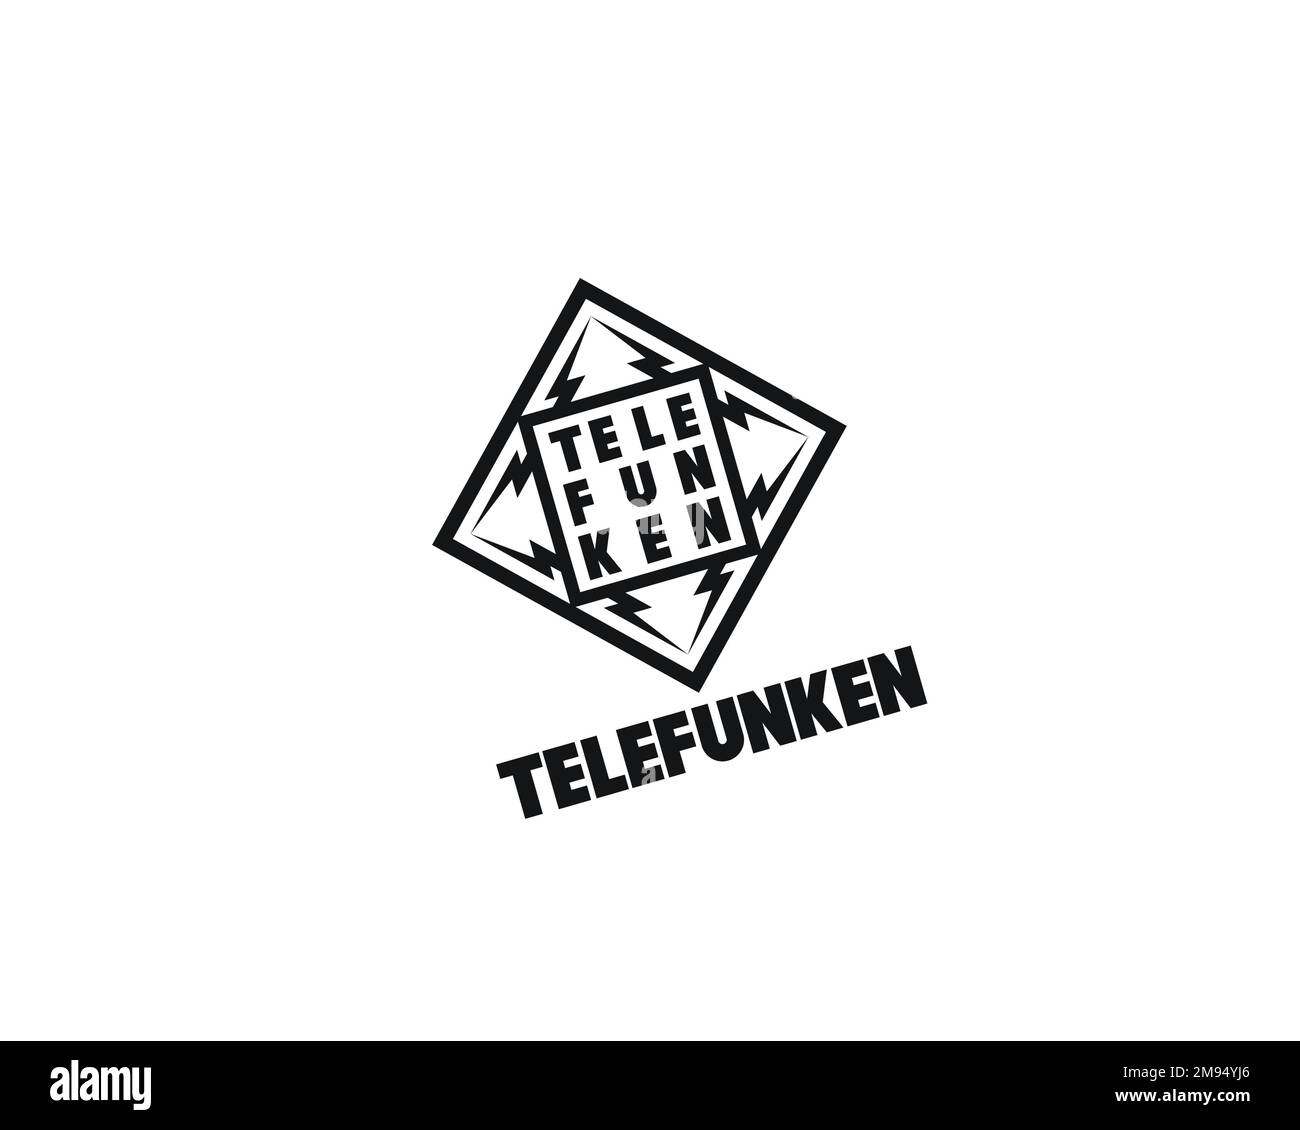 Telefunken, rotated logo, white background Stock Photo